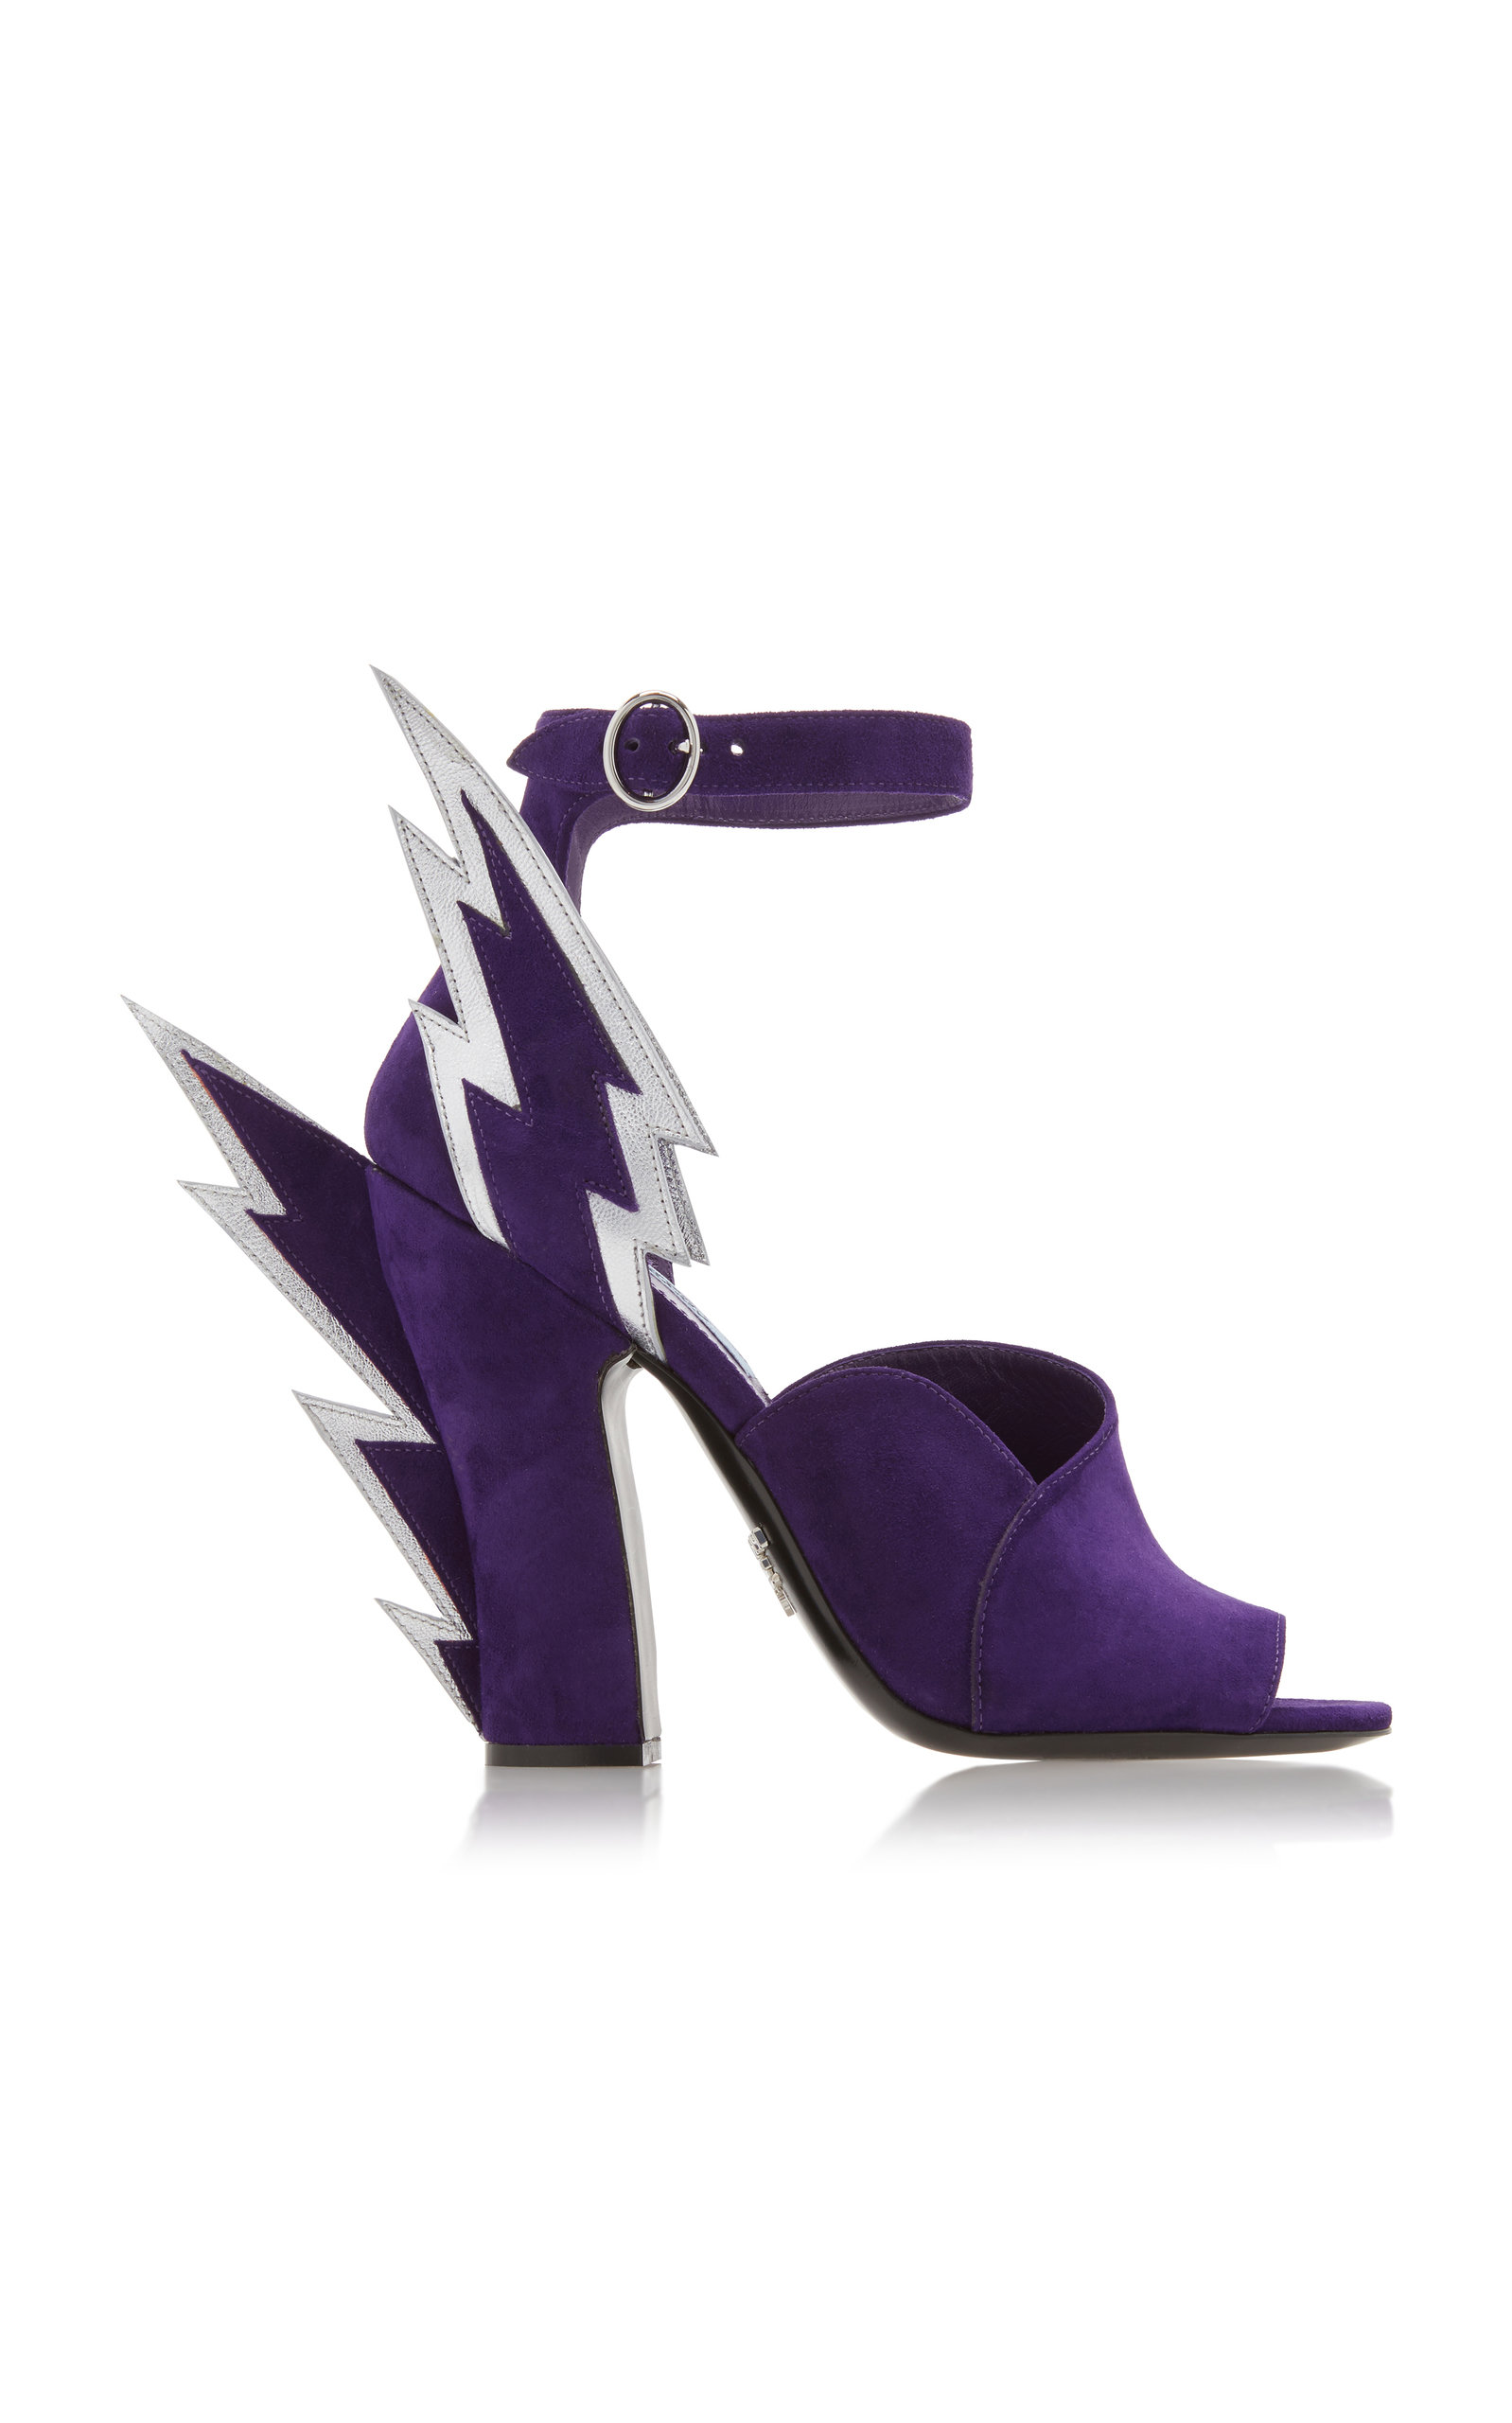 Prada - Women's Embellished Suede Sandals - Purple - IT 37 - Moda Operandi